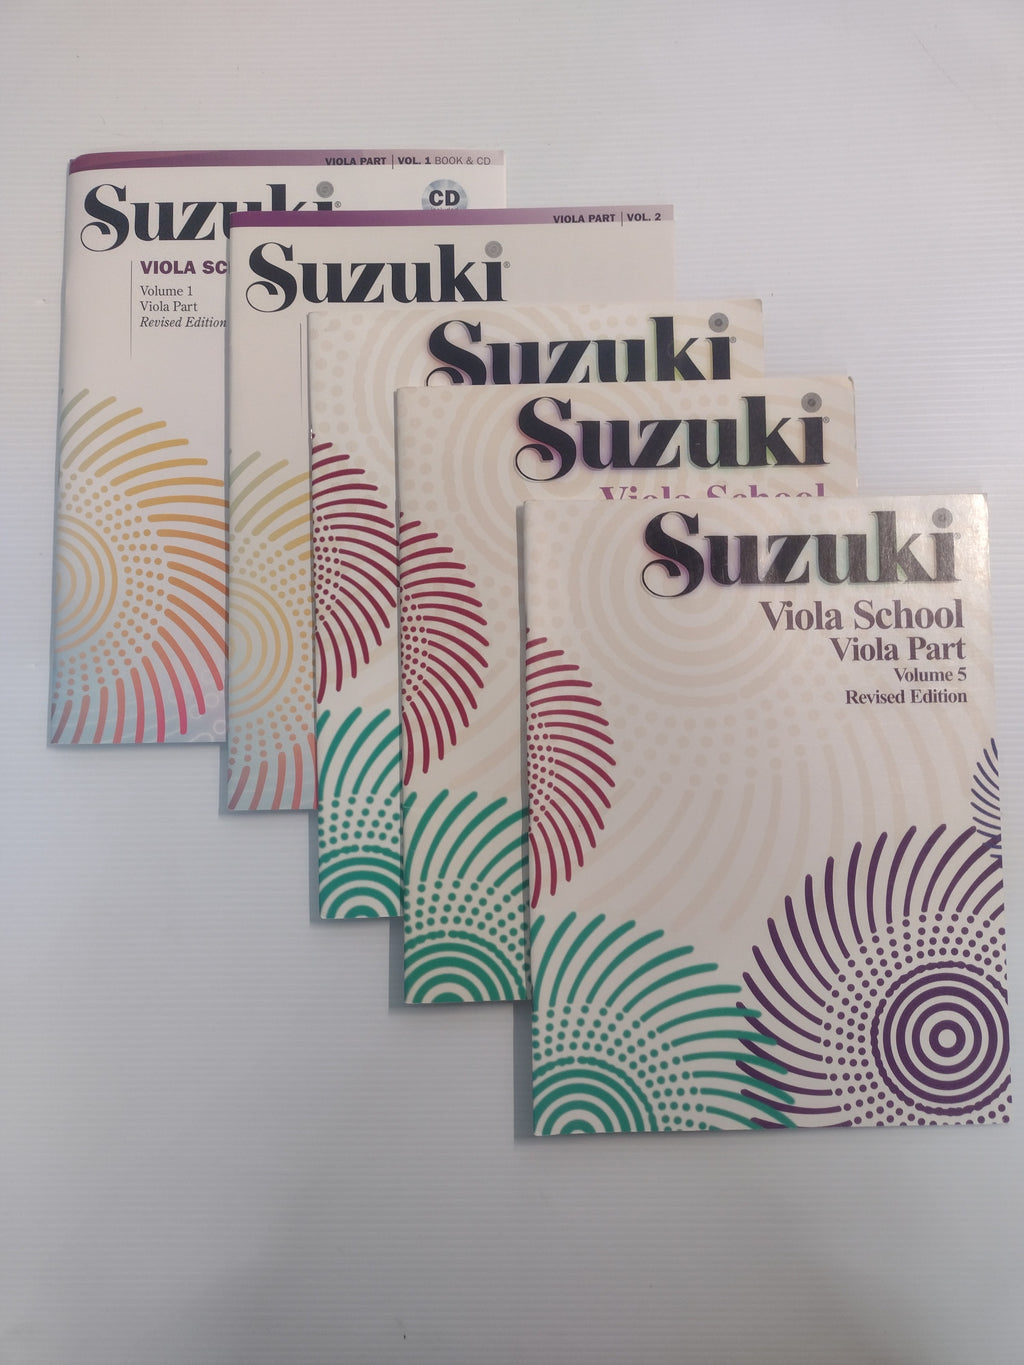 Suzuki Viola School Music Book (Vols. 1 and 2) - Revised Edition